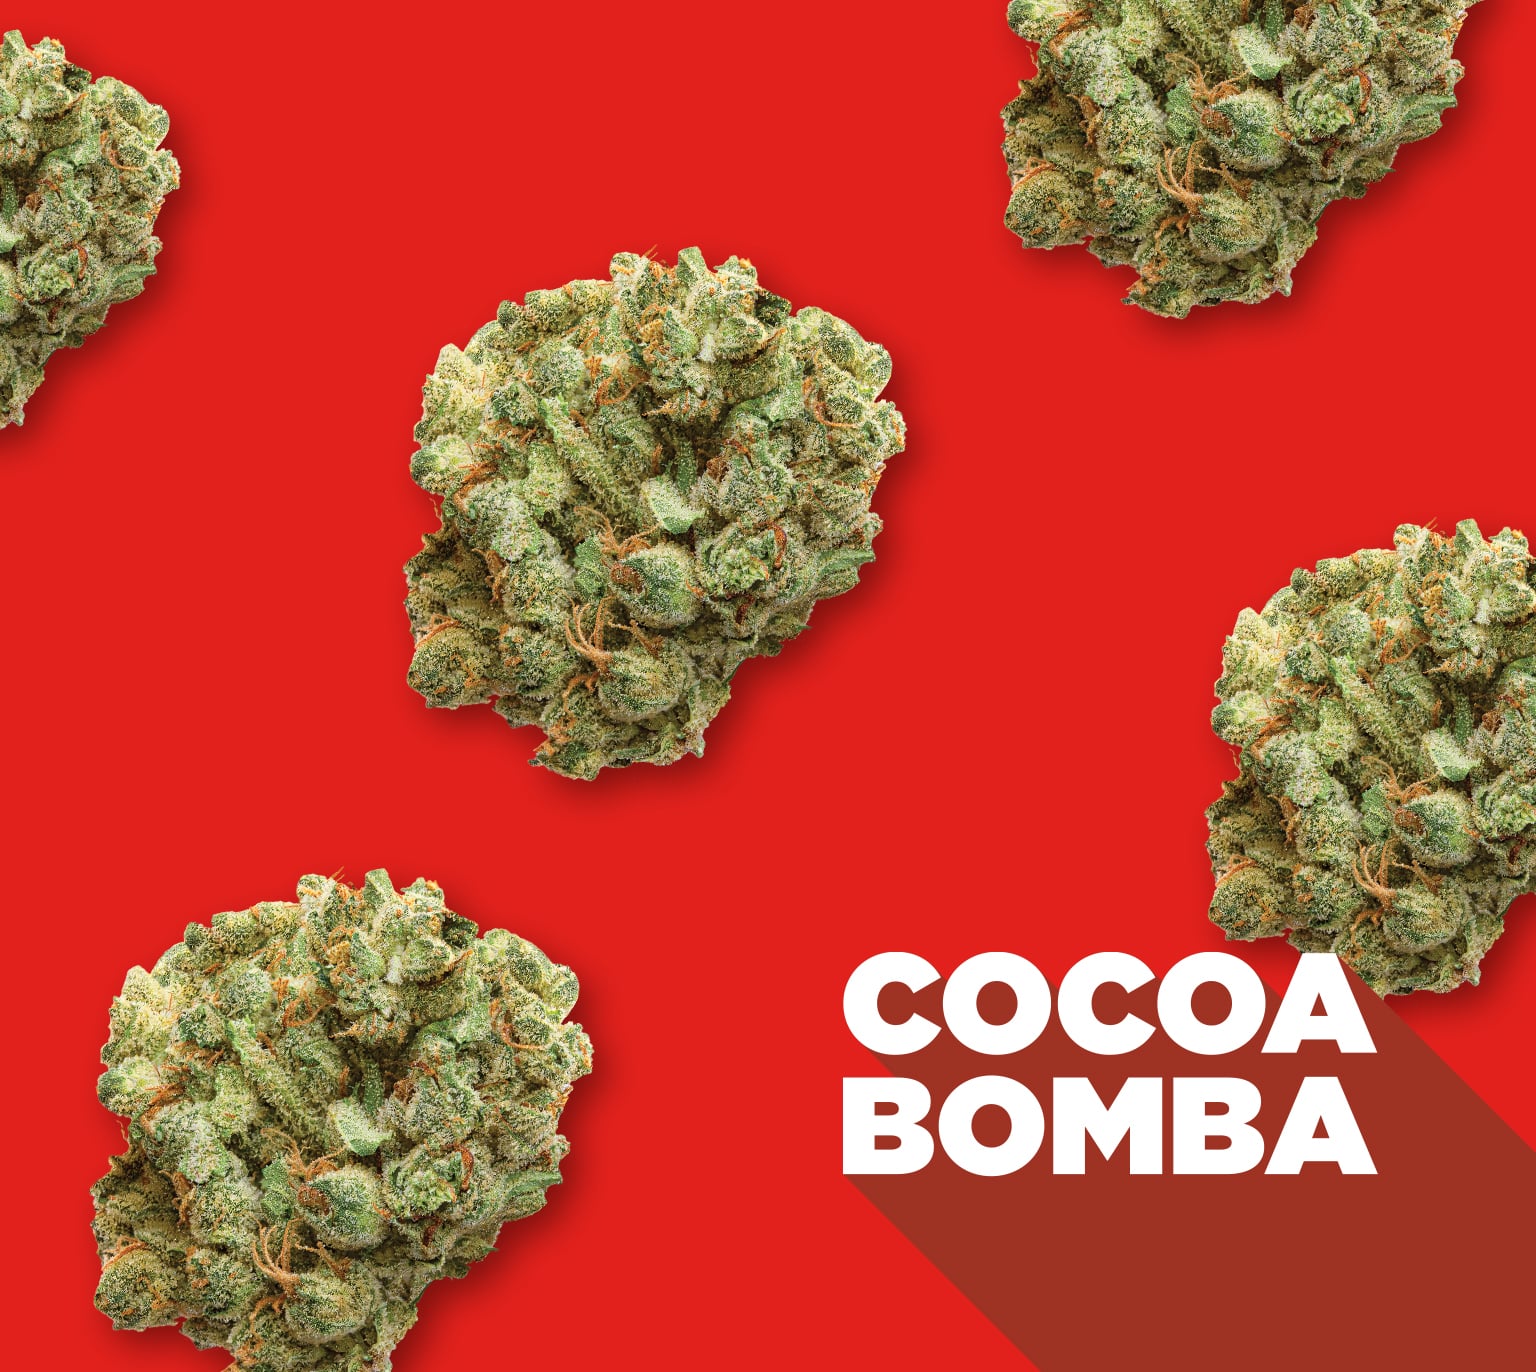 cocoa bomba with nugs